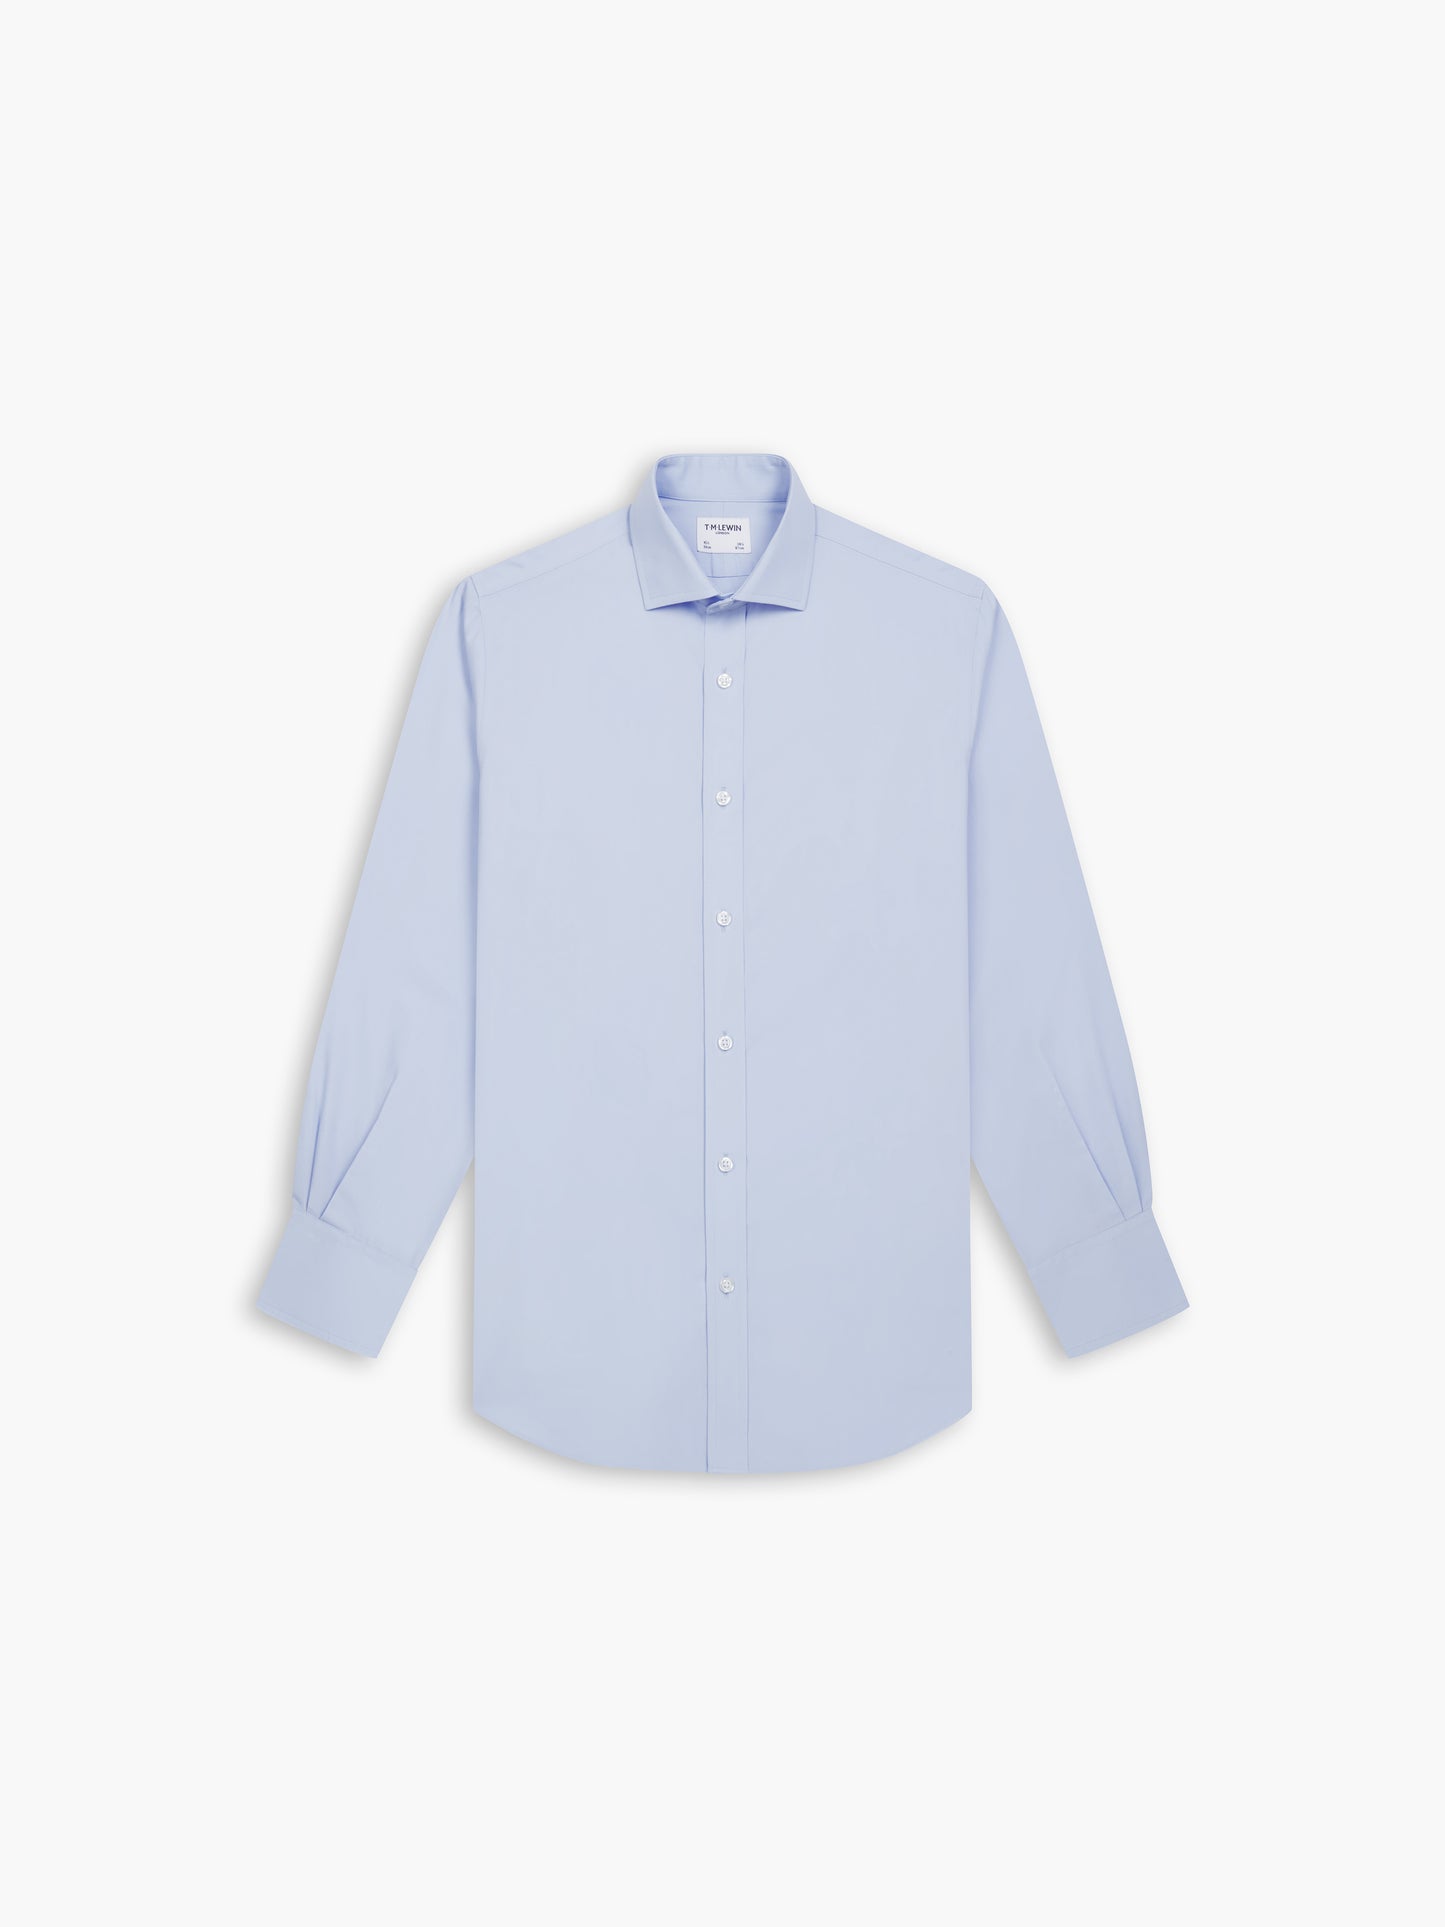 Non-Iron Light Blue Poplin Fitted Single Cuff Classic Collar Shirt